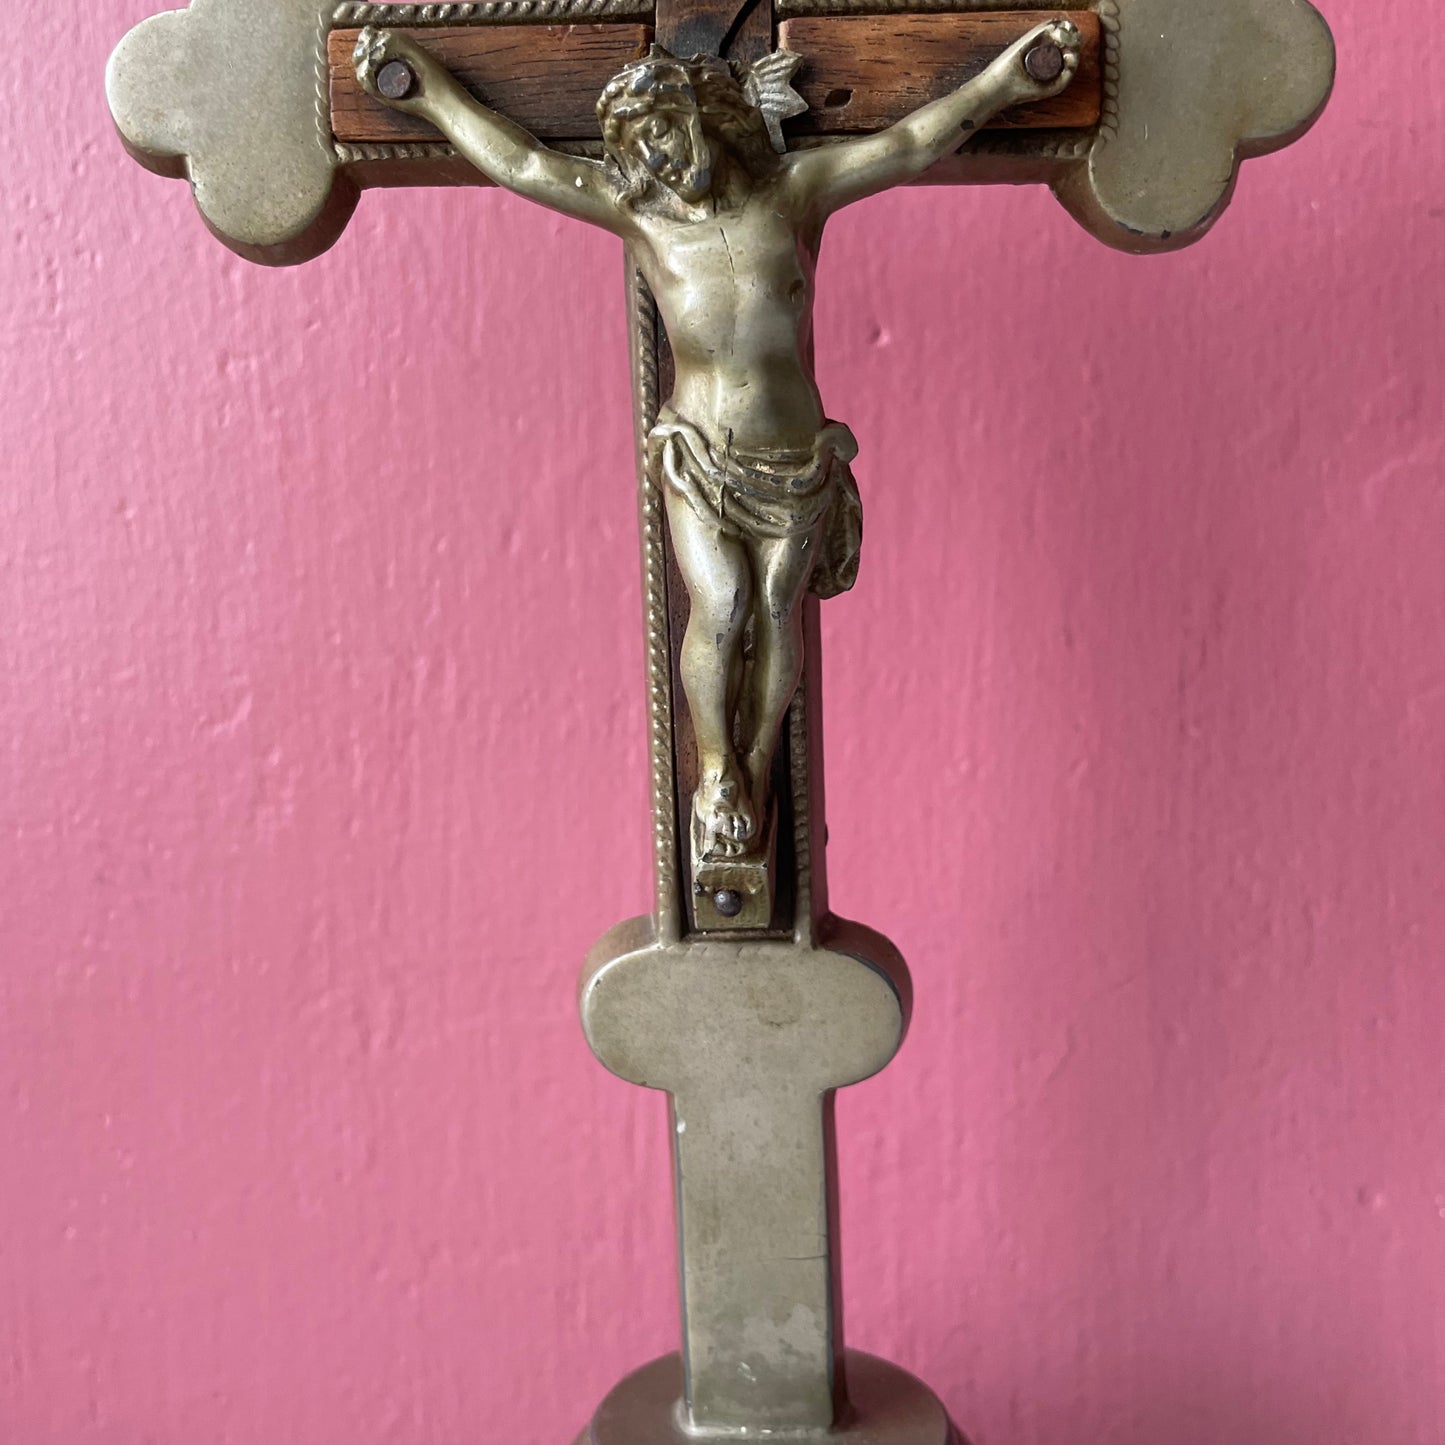 Antique Standing Crucifix